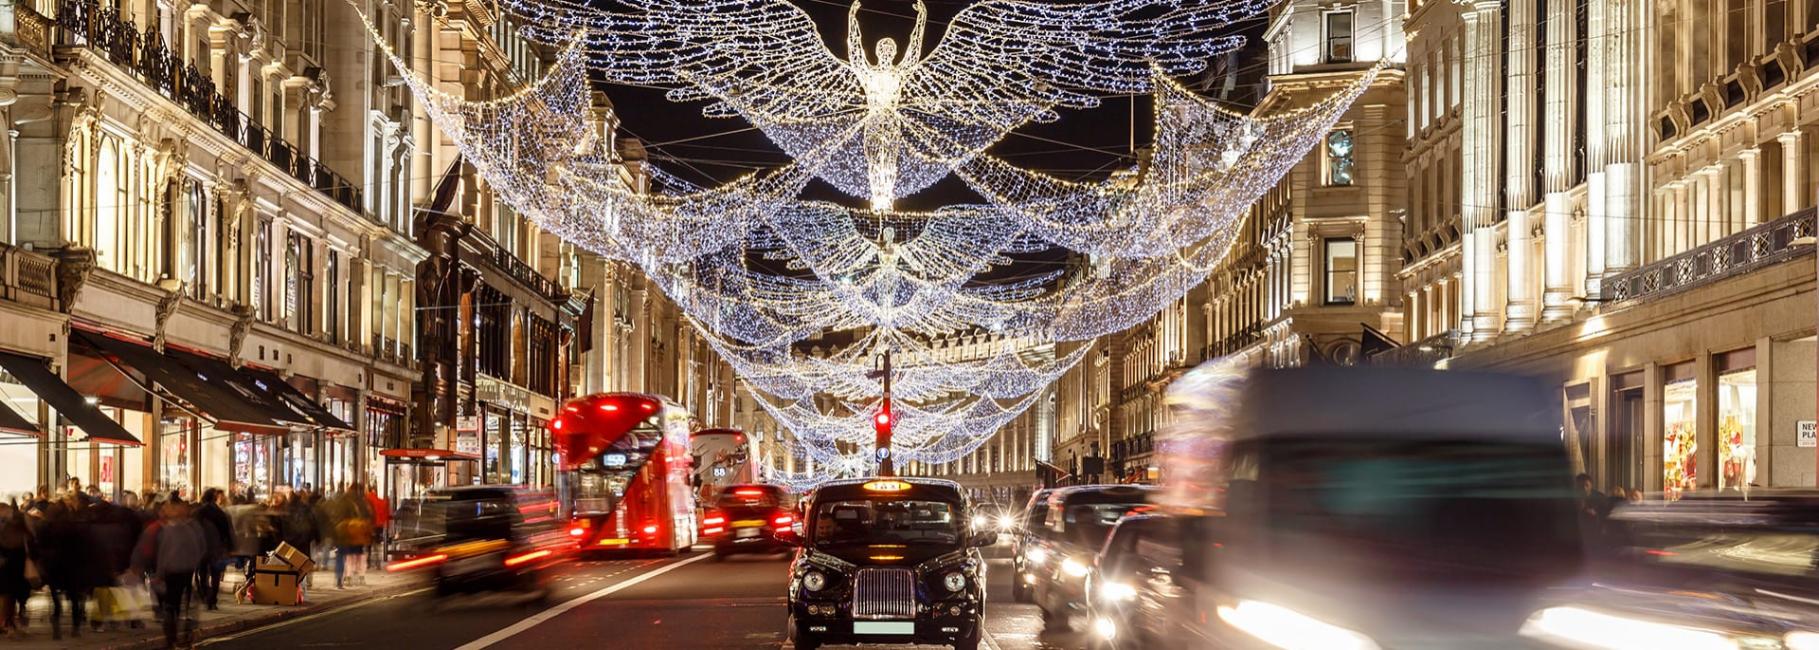 London ChristmasMarkets trip header est